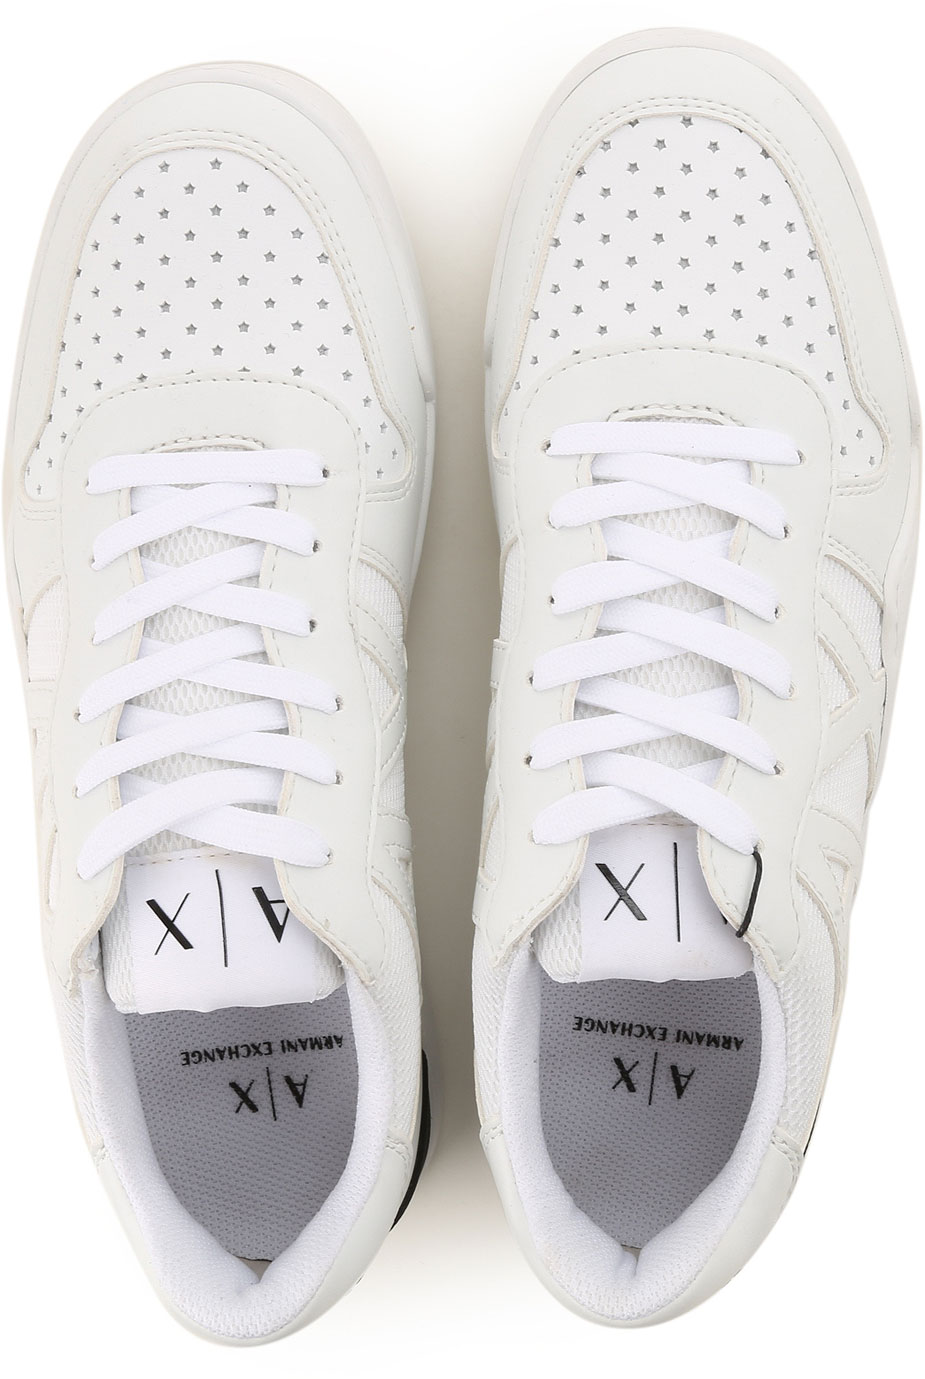 Mens Shoes Armani Exchange, Style code: xux009-xv012-00152